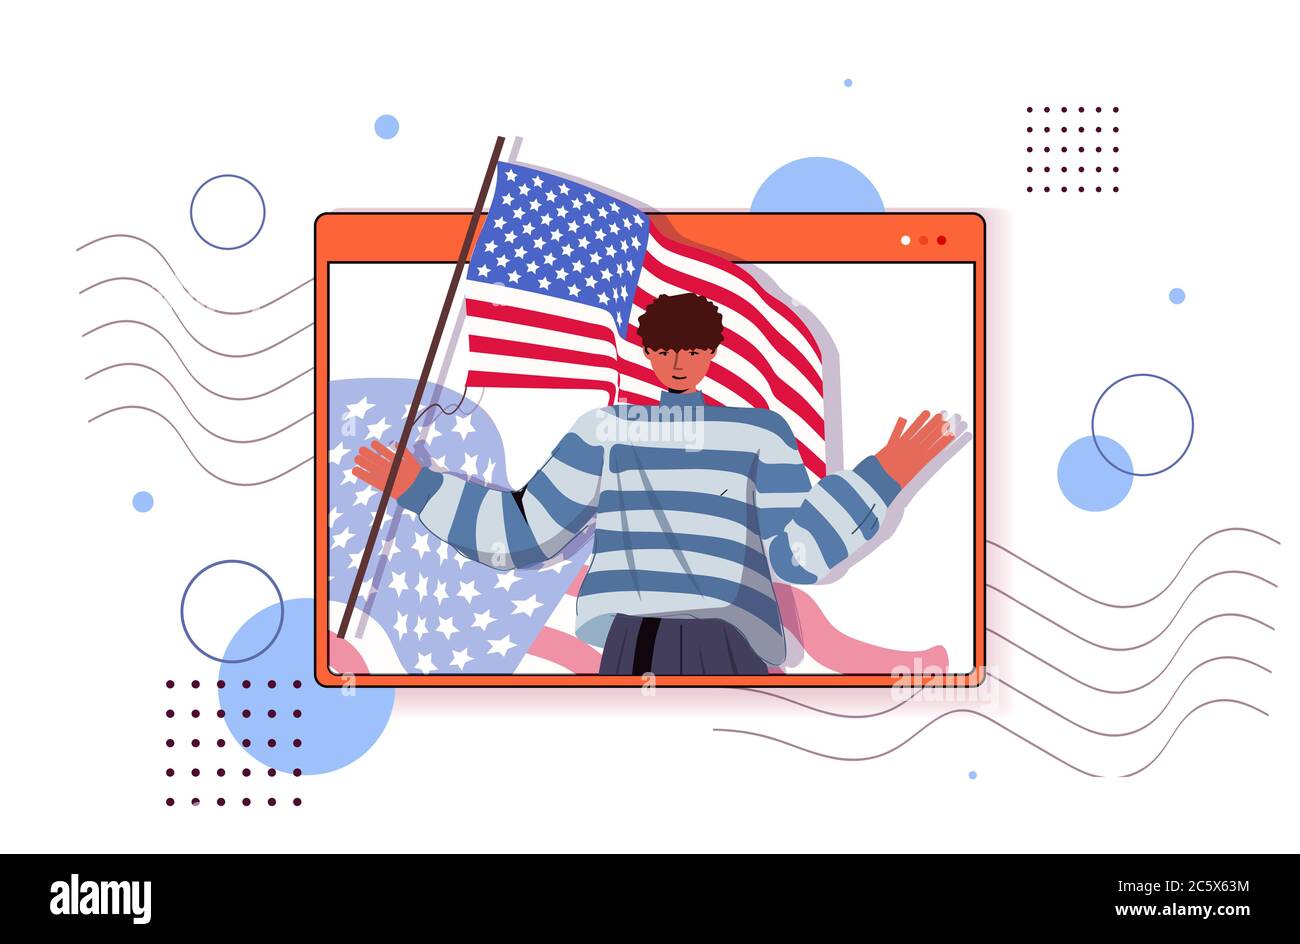 Mann hält usa Flagge feiert 4. Juli amerikanischen Unabhängigkeitstag Konzept Web-Browser Fenster Porträt horizontale Vektor Illustration Stock Vektor